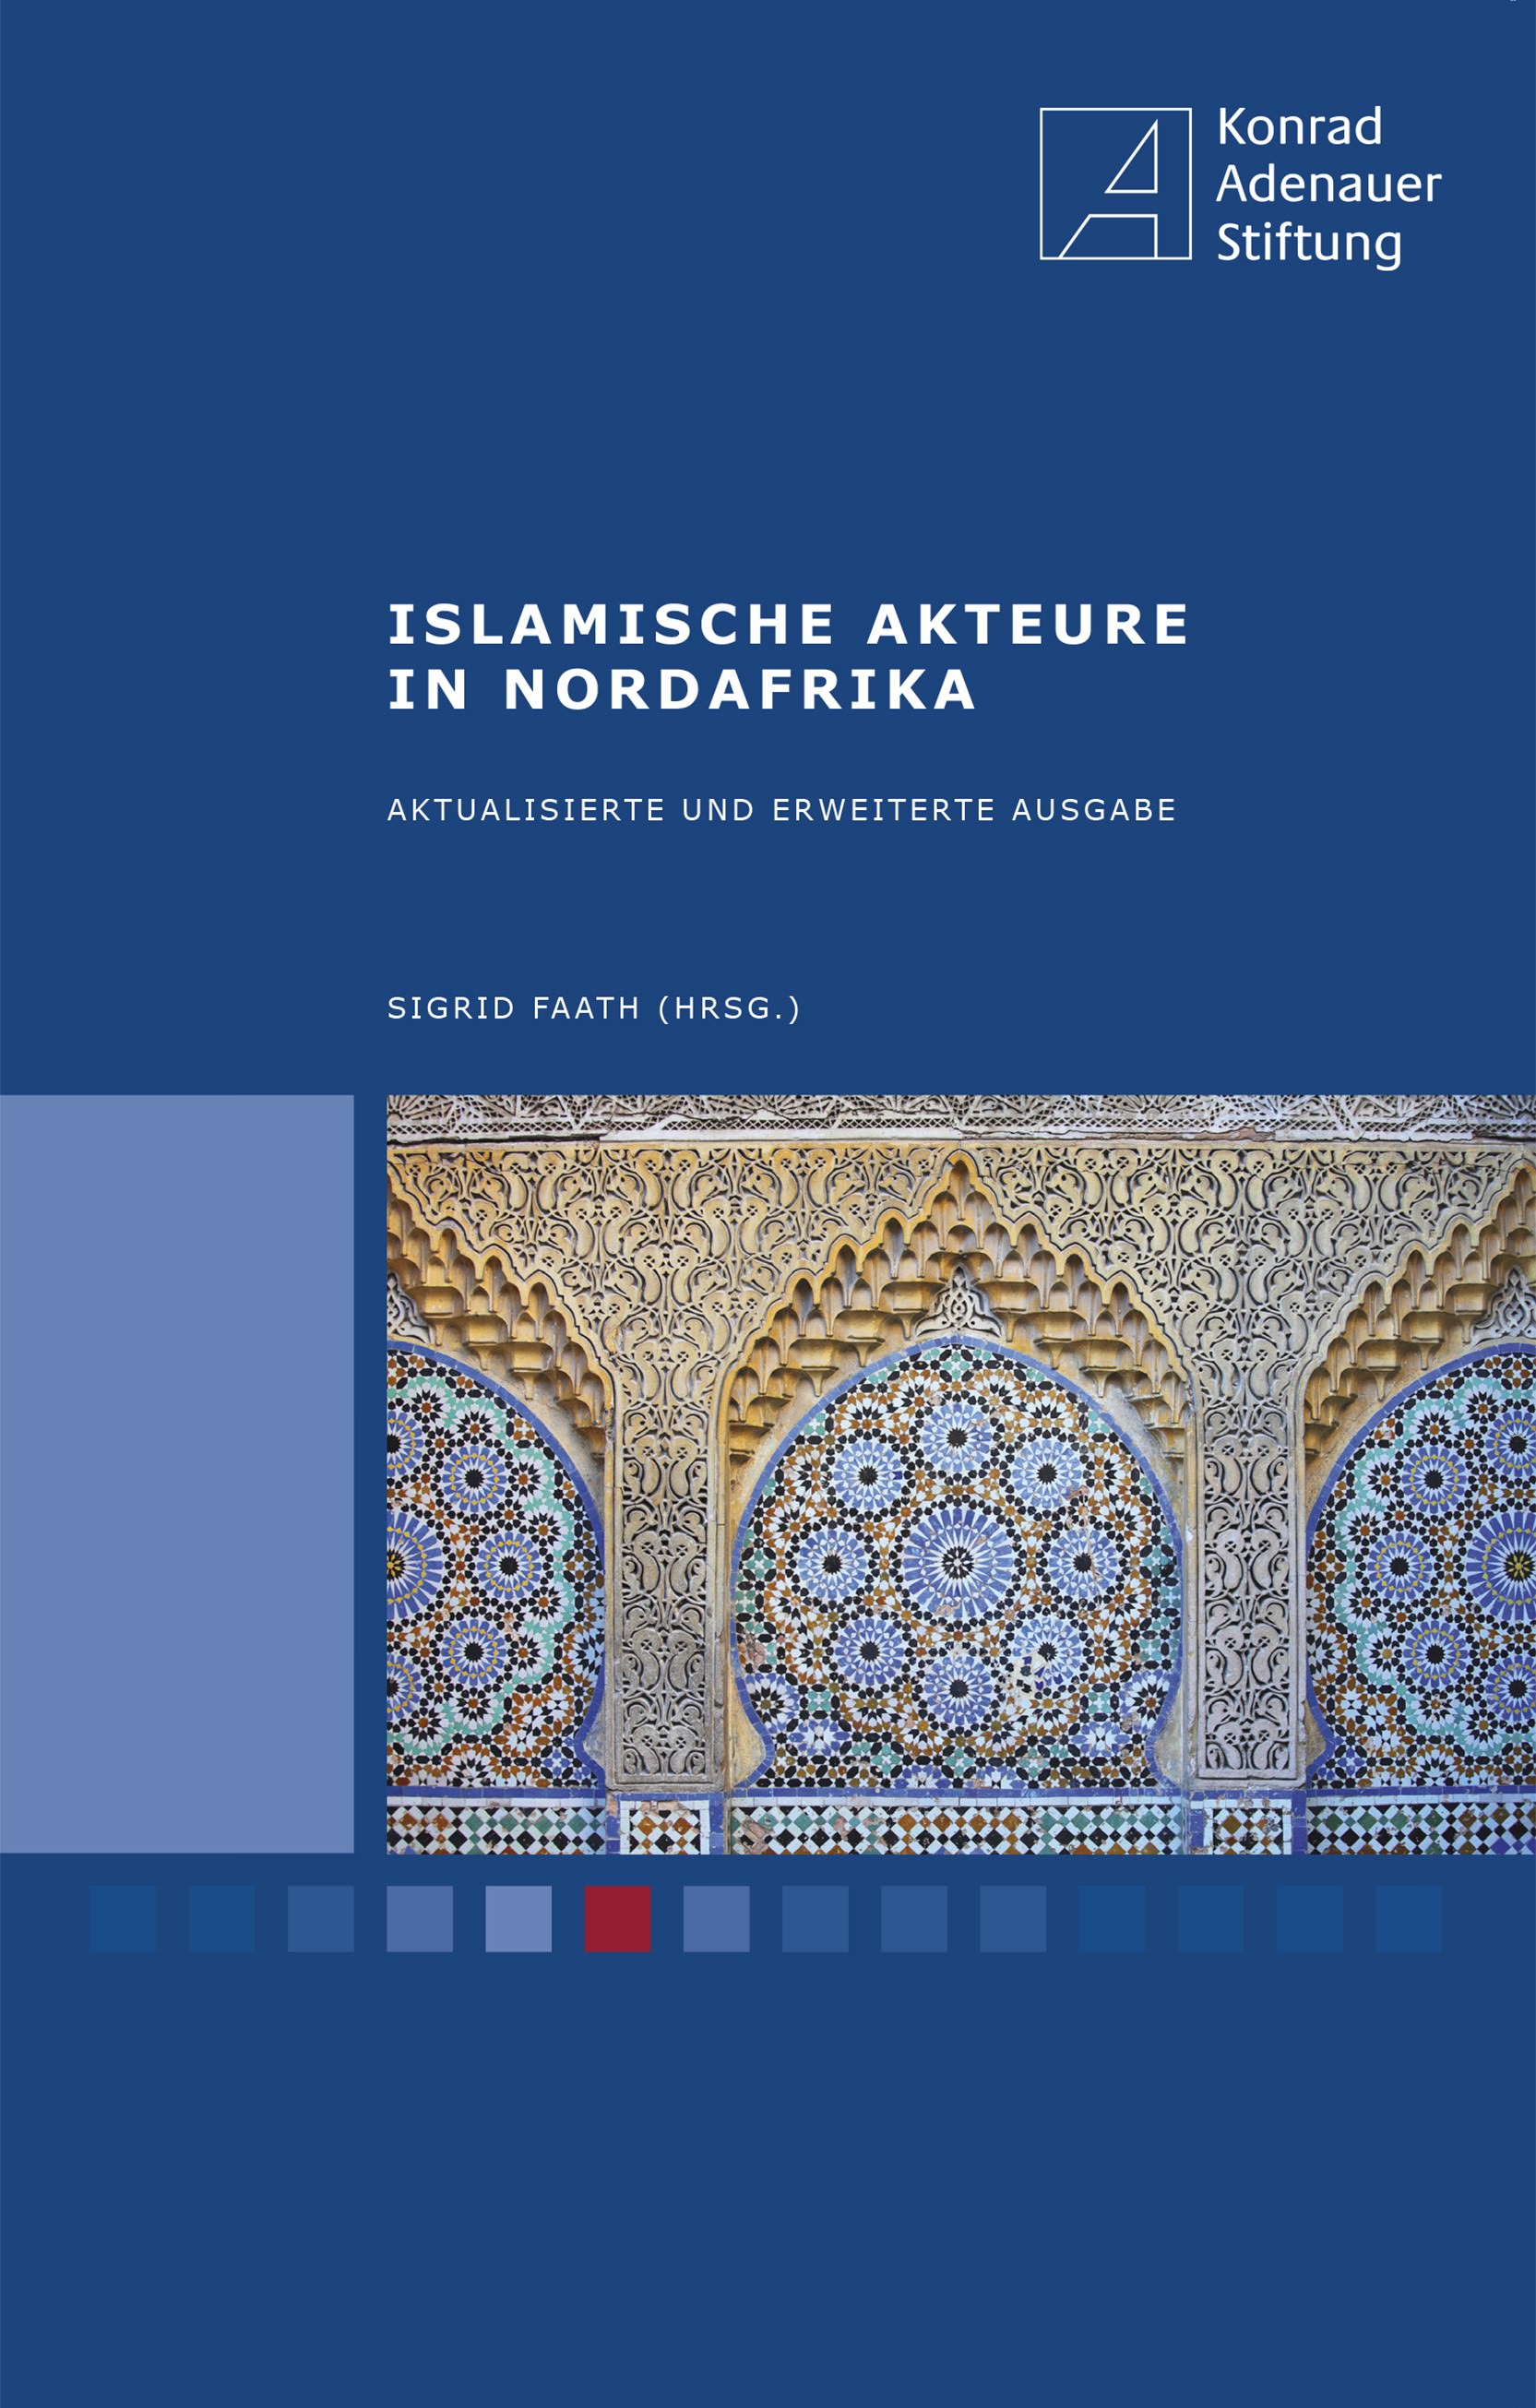 Sigrid Faath (Hrsg.), Islamische Akteure in Nordafrika. Konrad Adenauer Stiftung